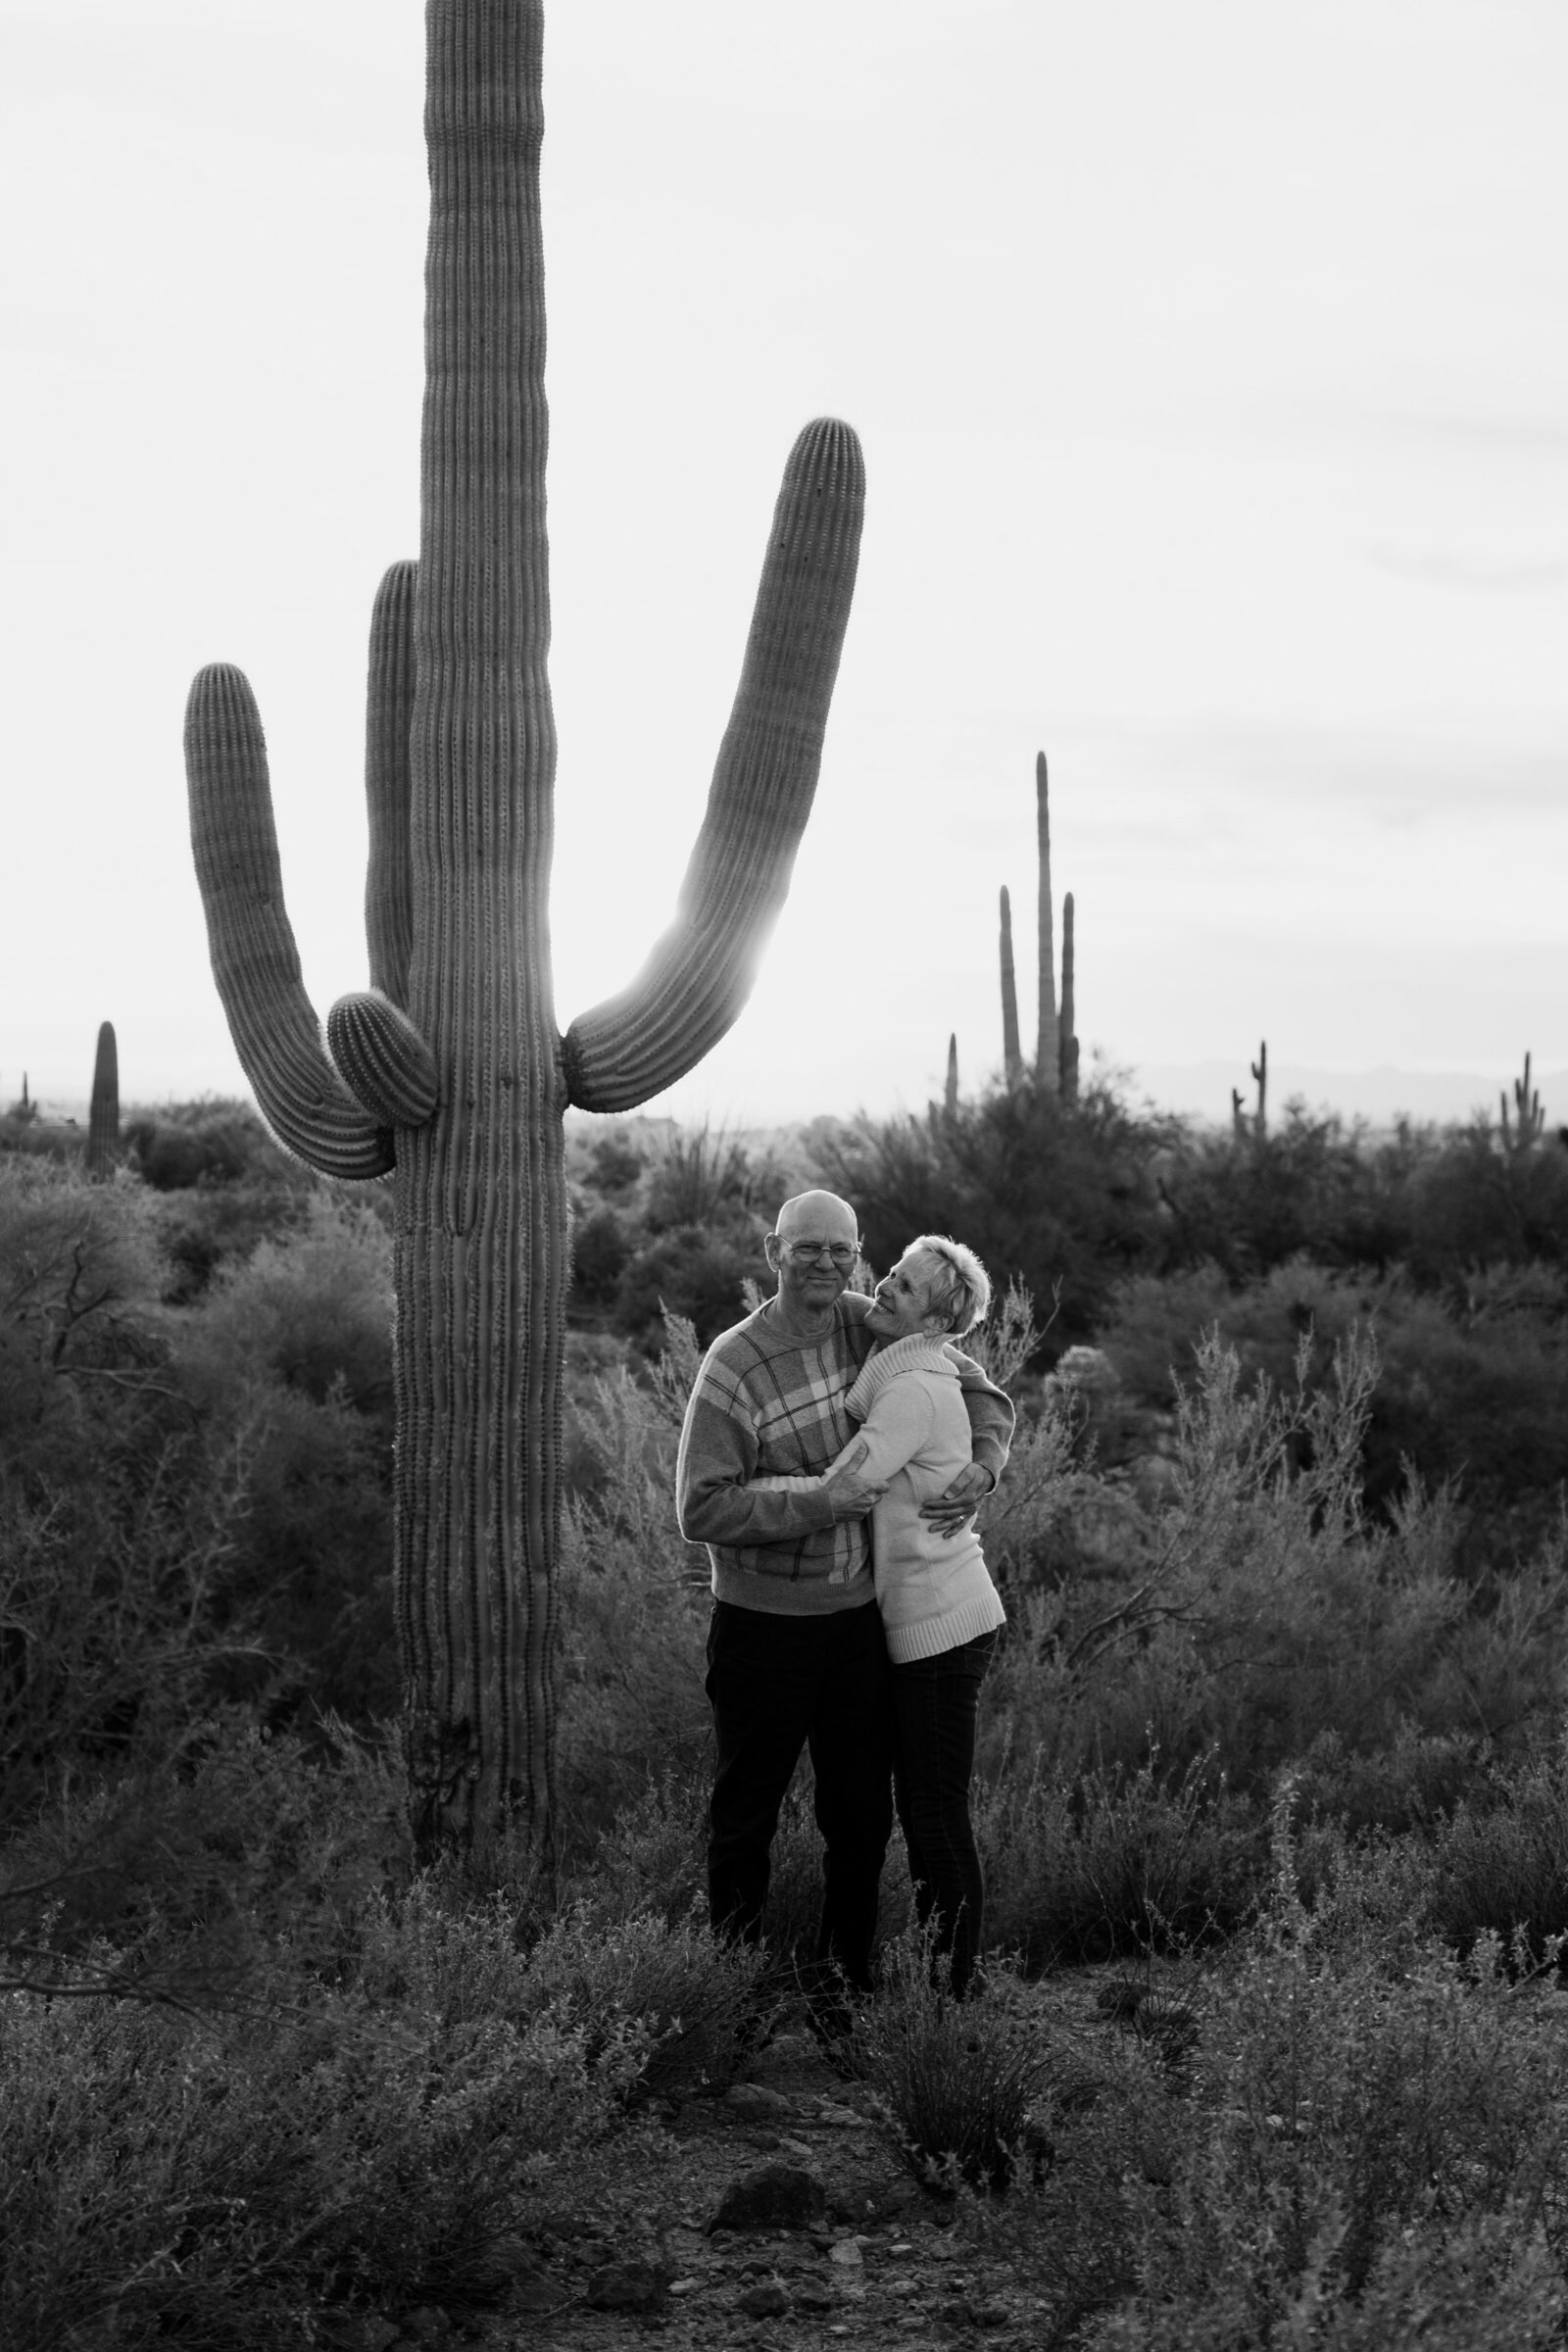 Arizona elopement photographer